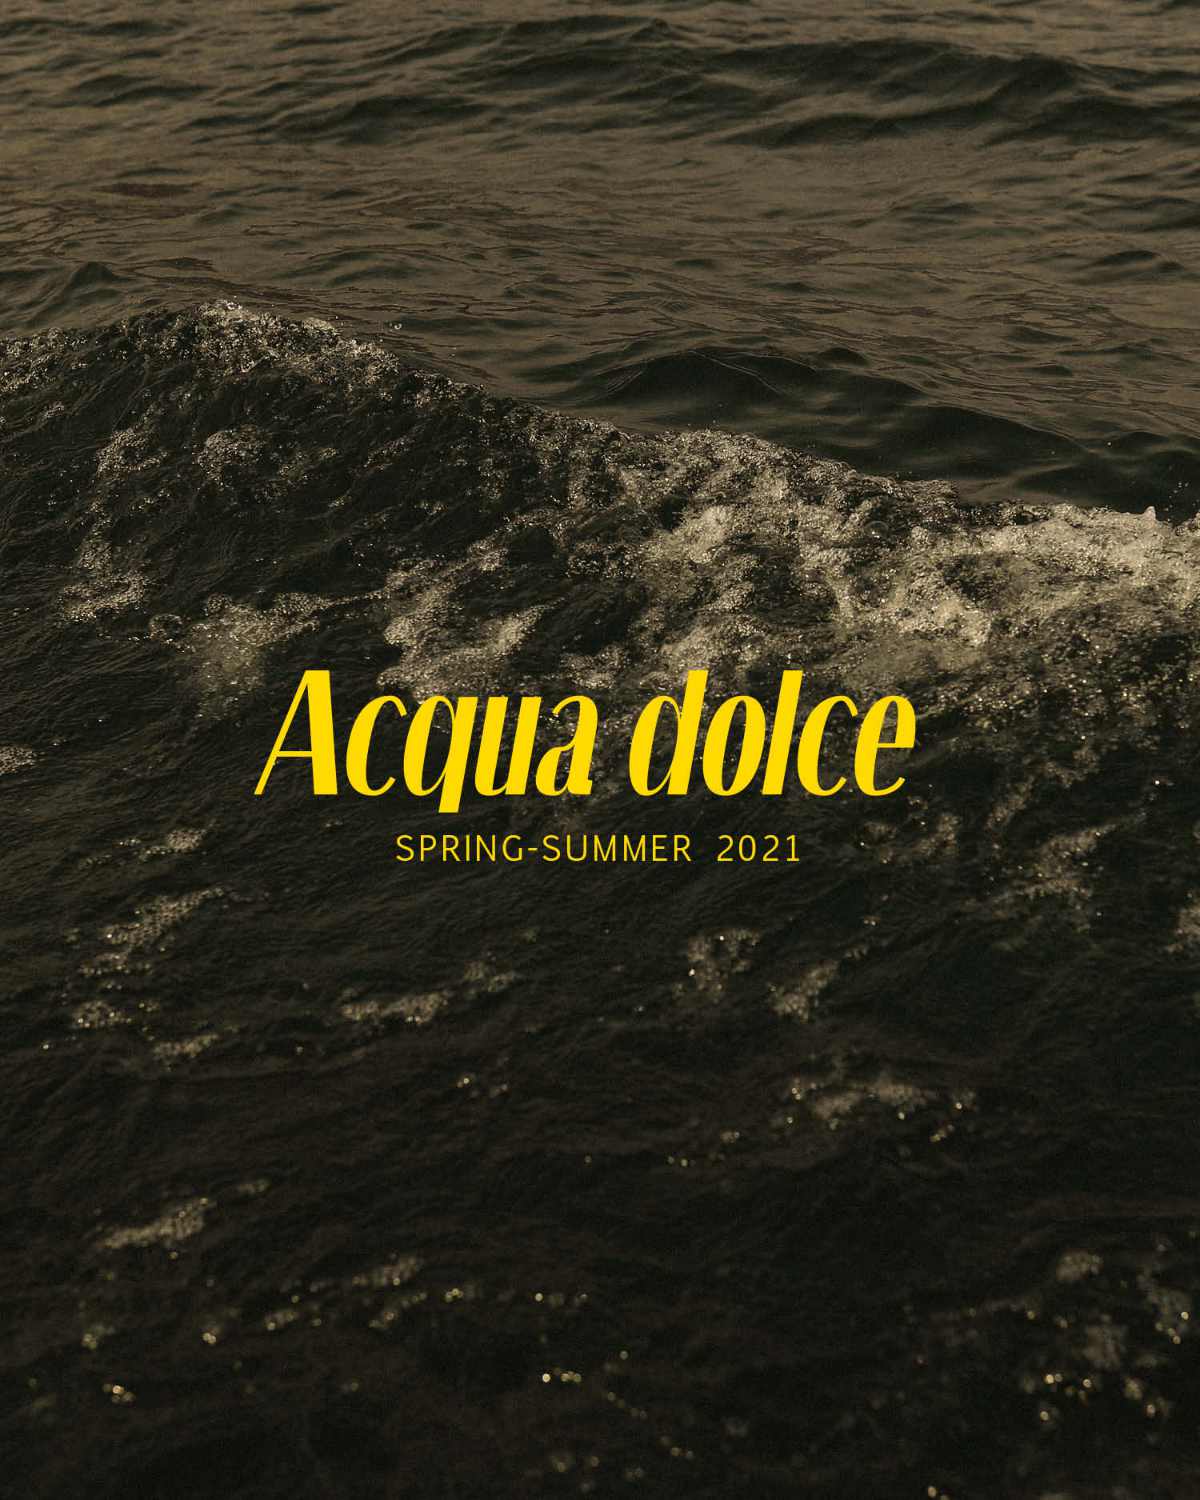 Boglioli Presents Its New Spring-Summer 2021 Collection - Acqua Dolce